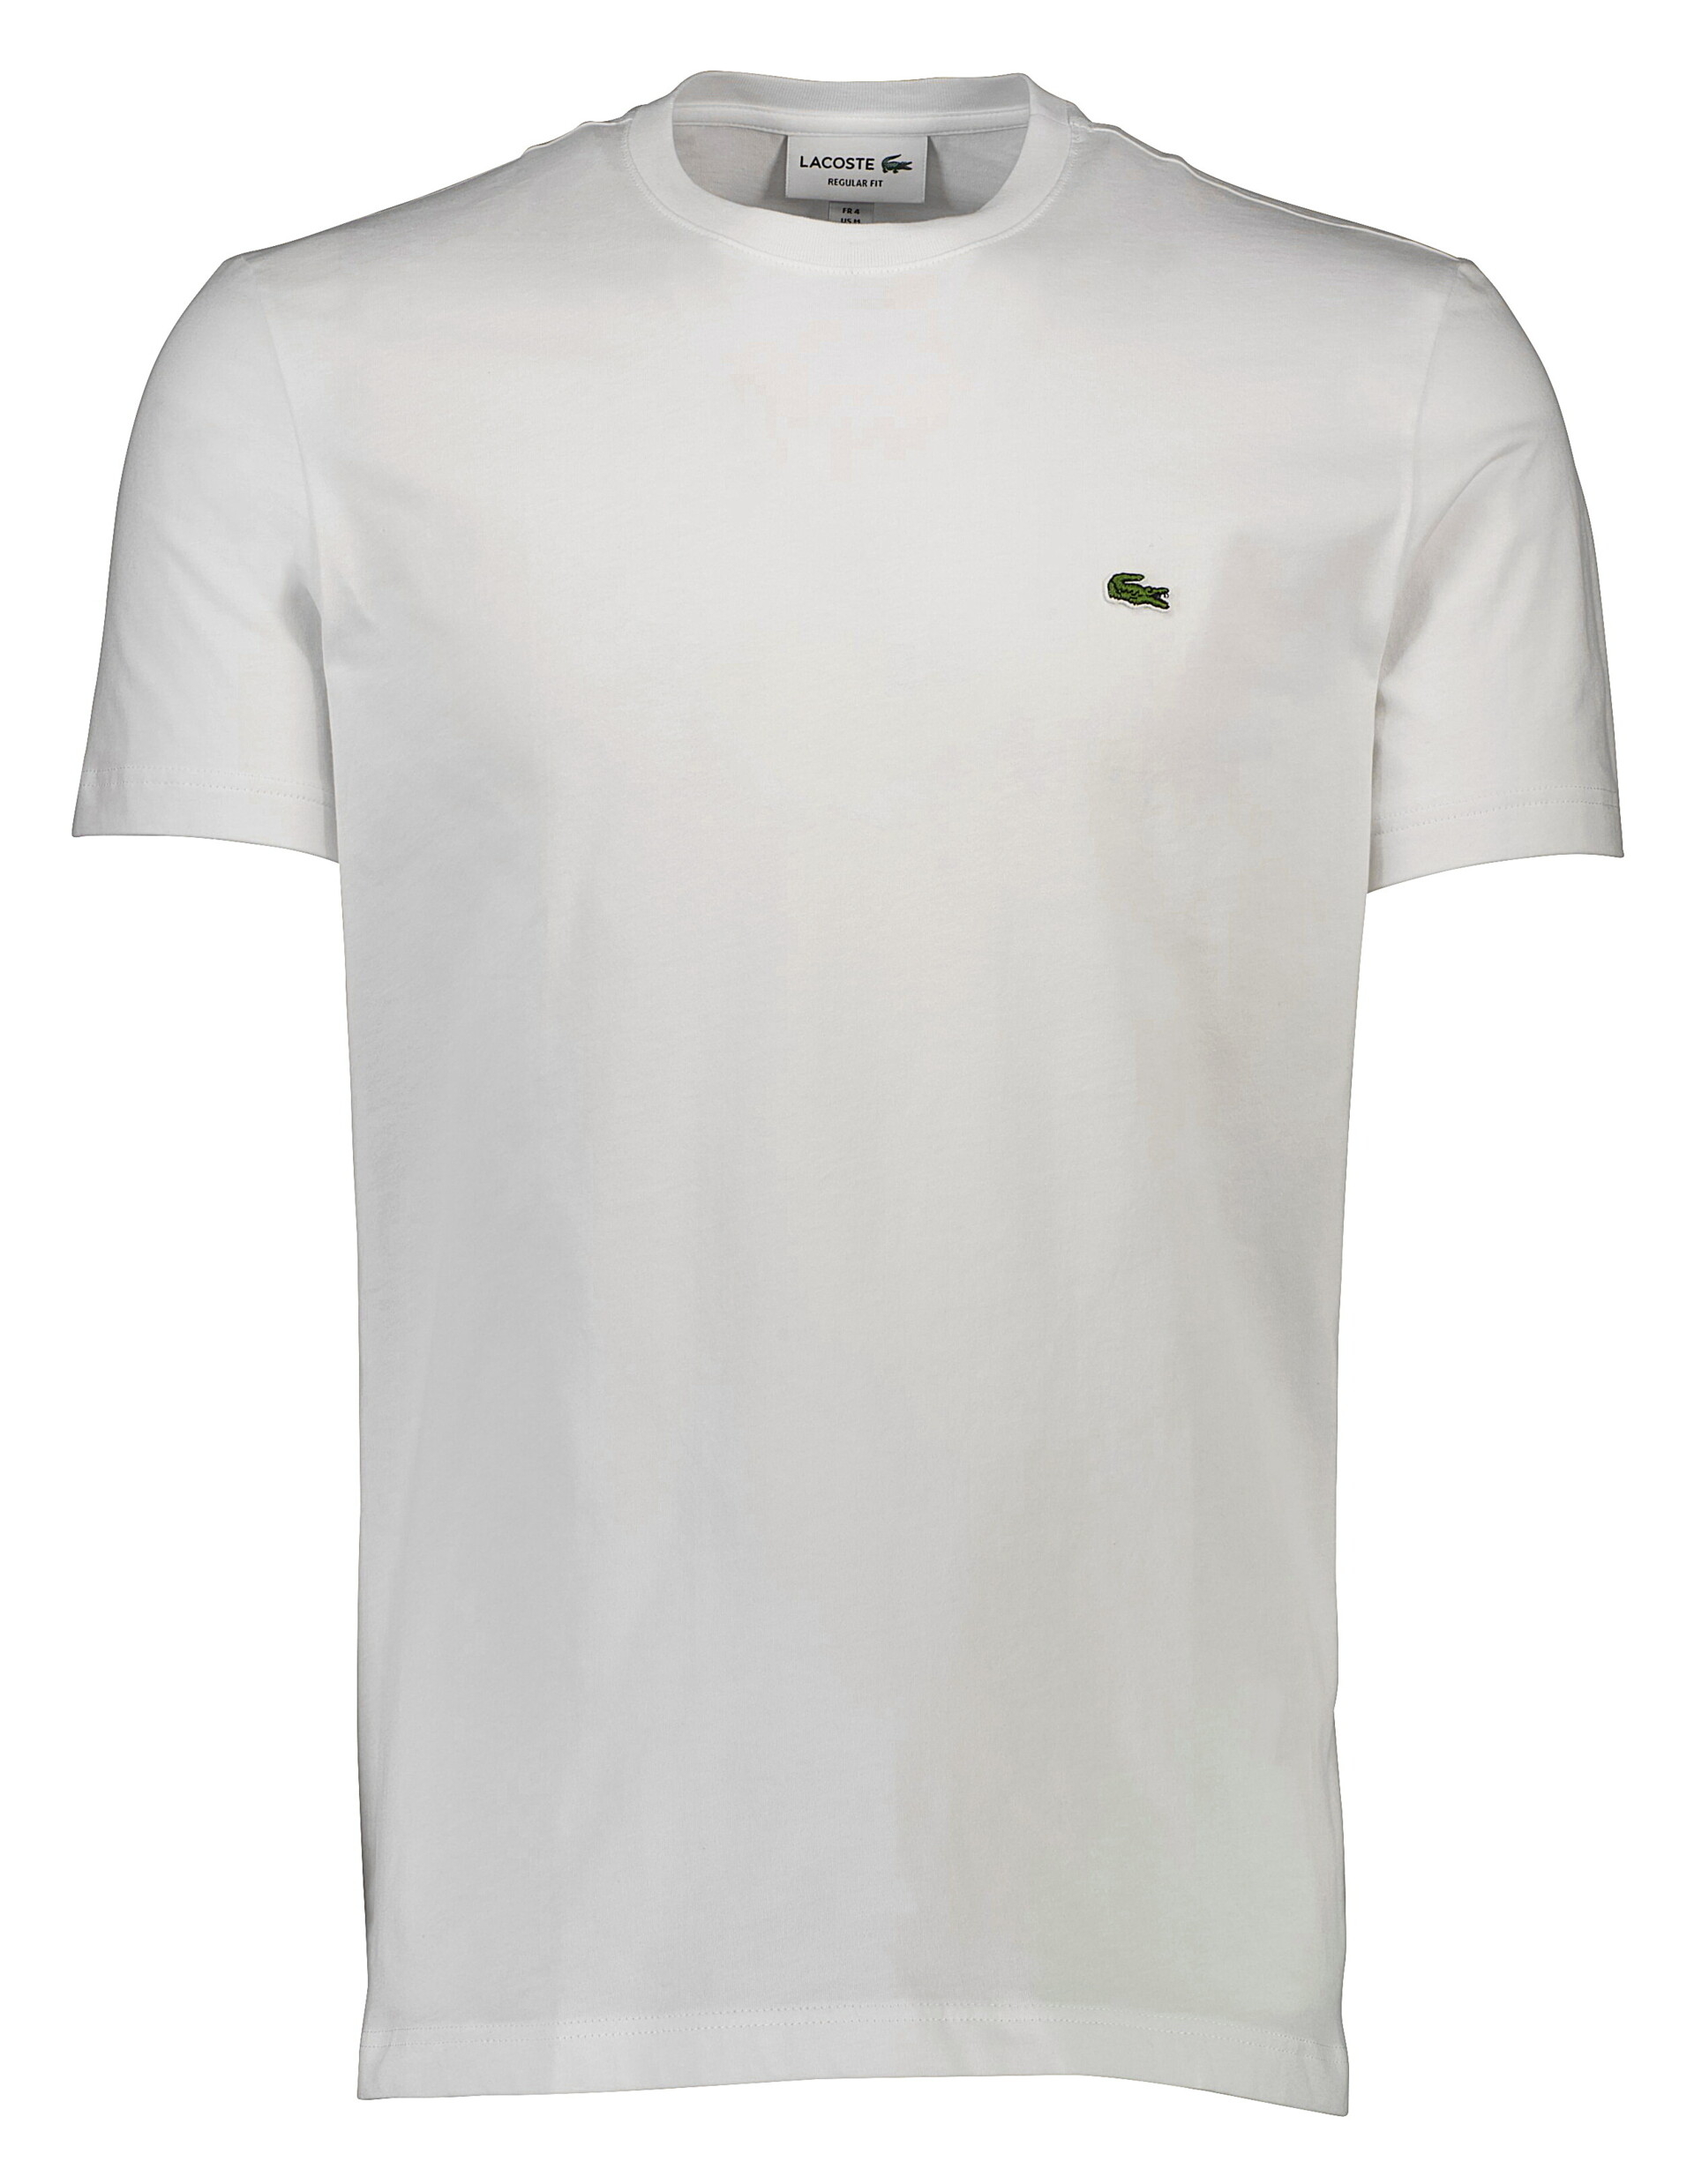 Lacoste T-shirt hvid / 001 white